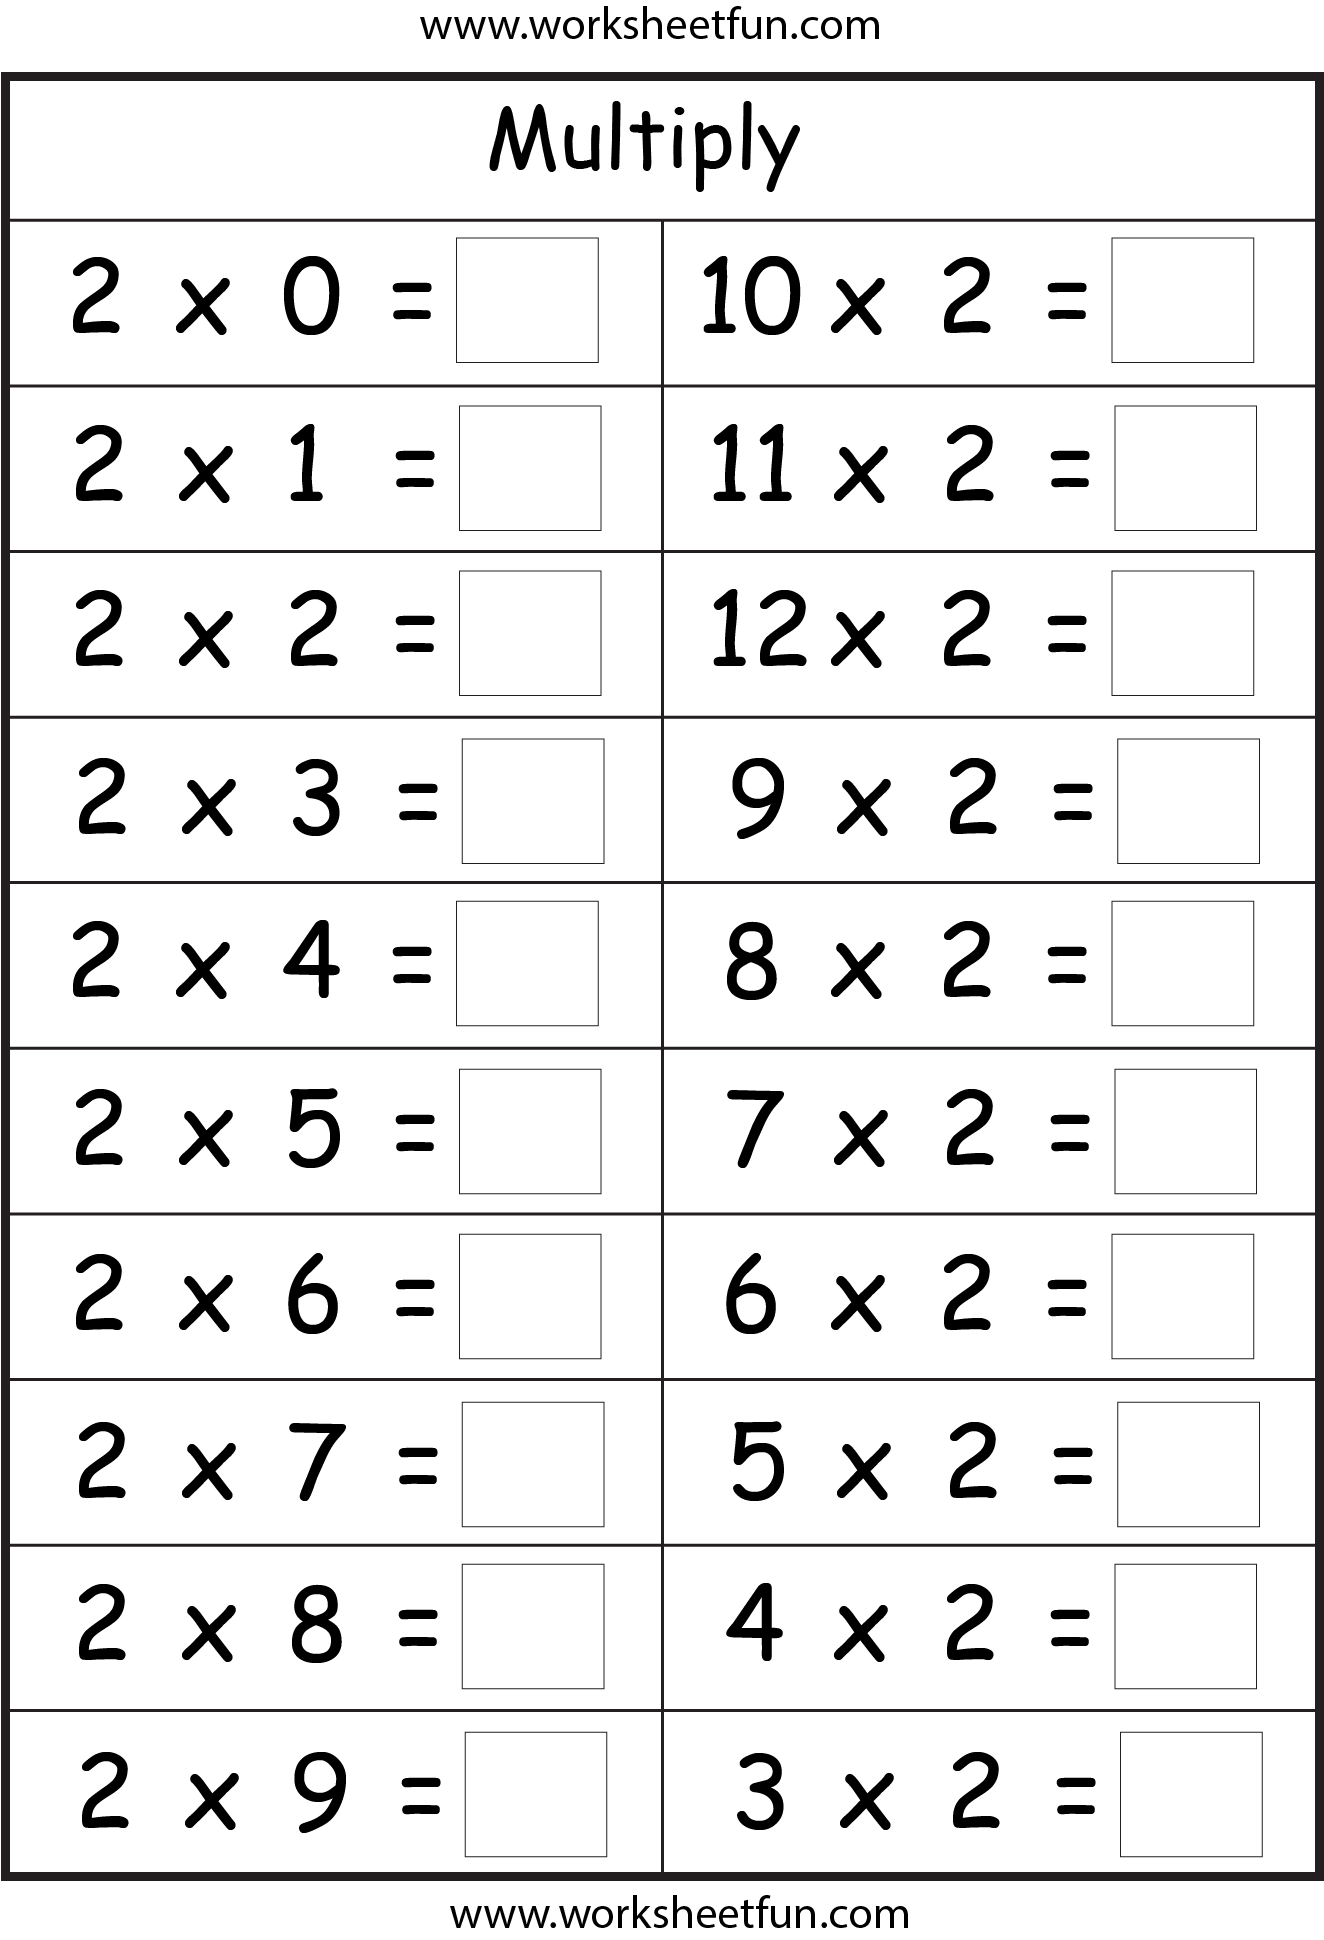 number-sentences-multiplying-by-3-3rd-grade-math-worksheet-multiplication-word-problem